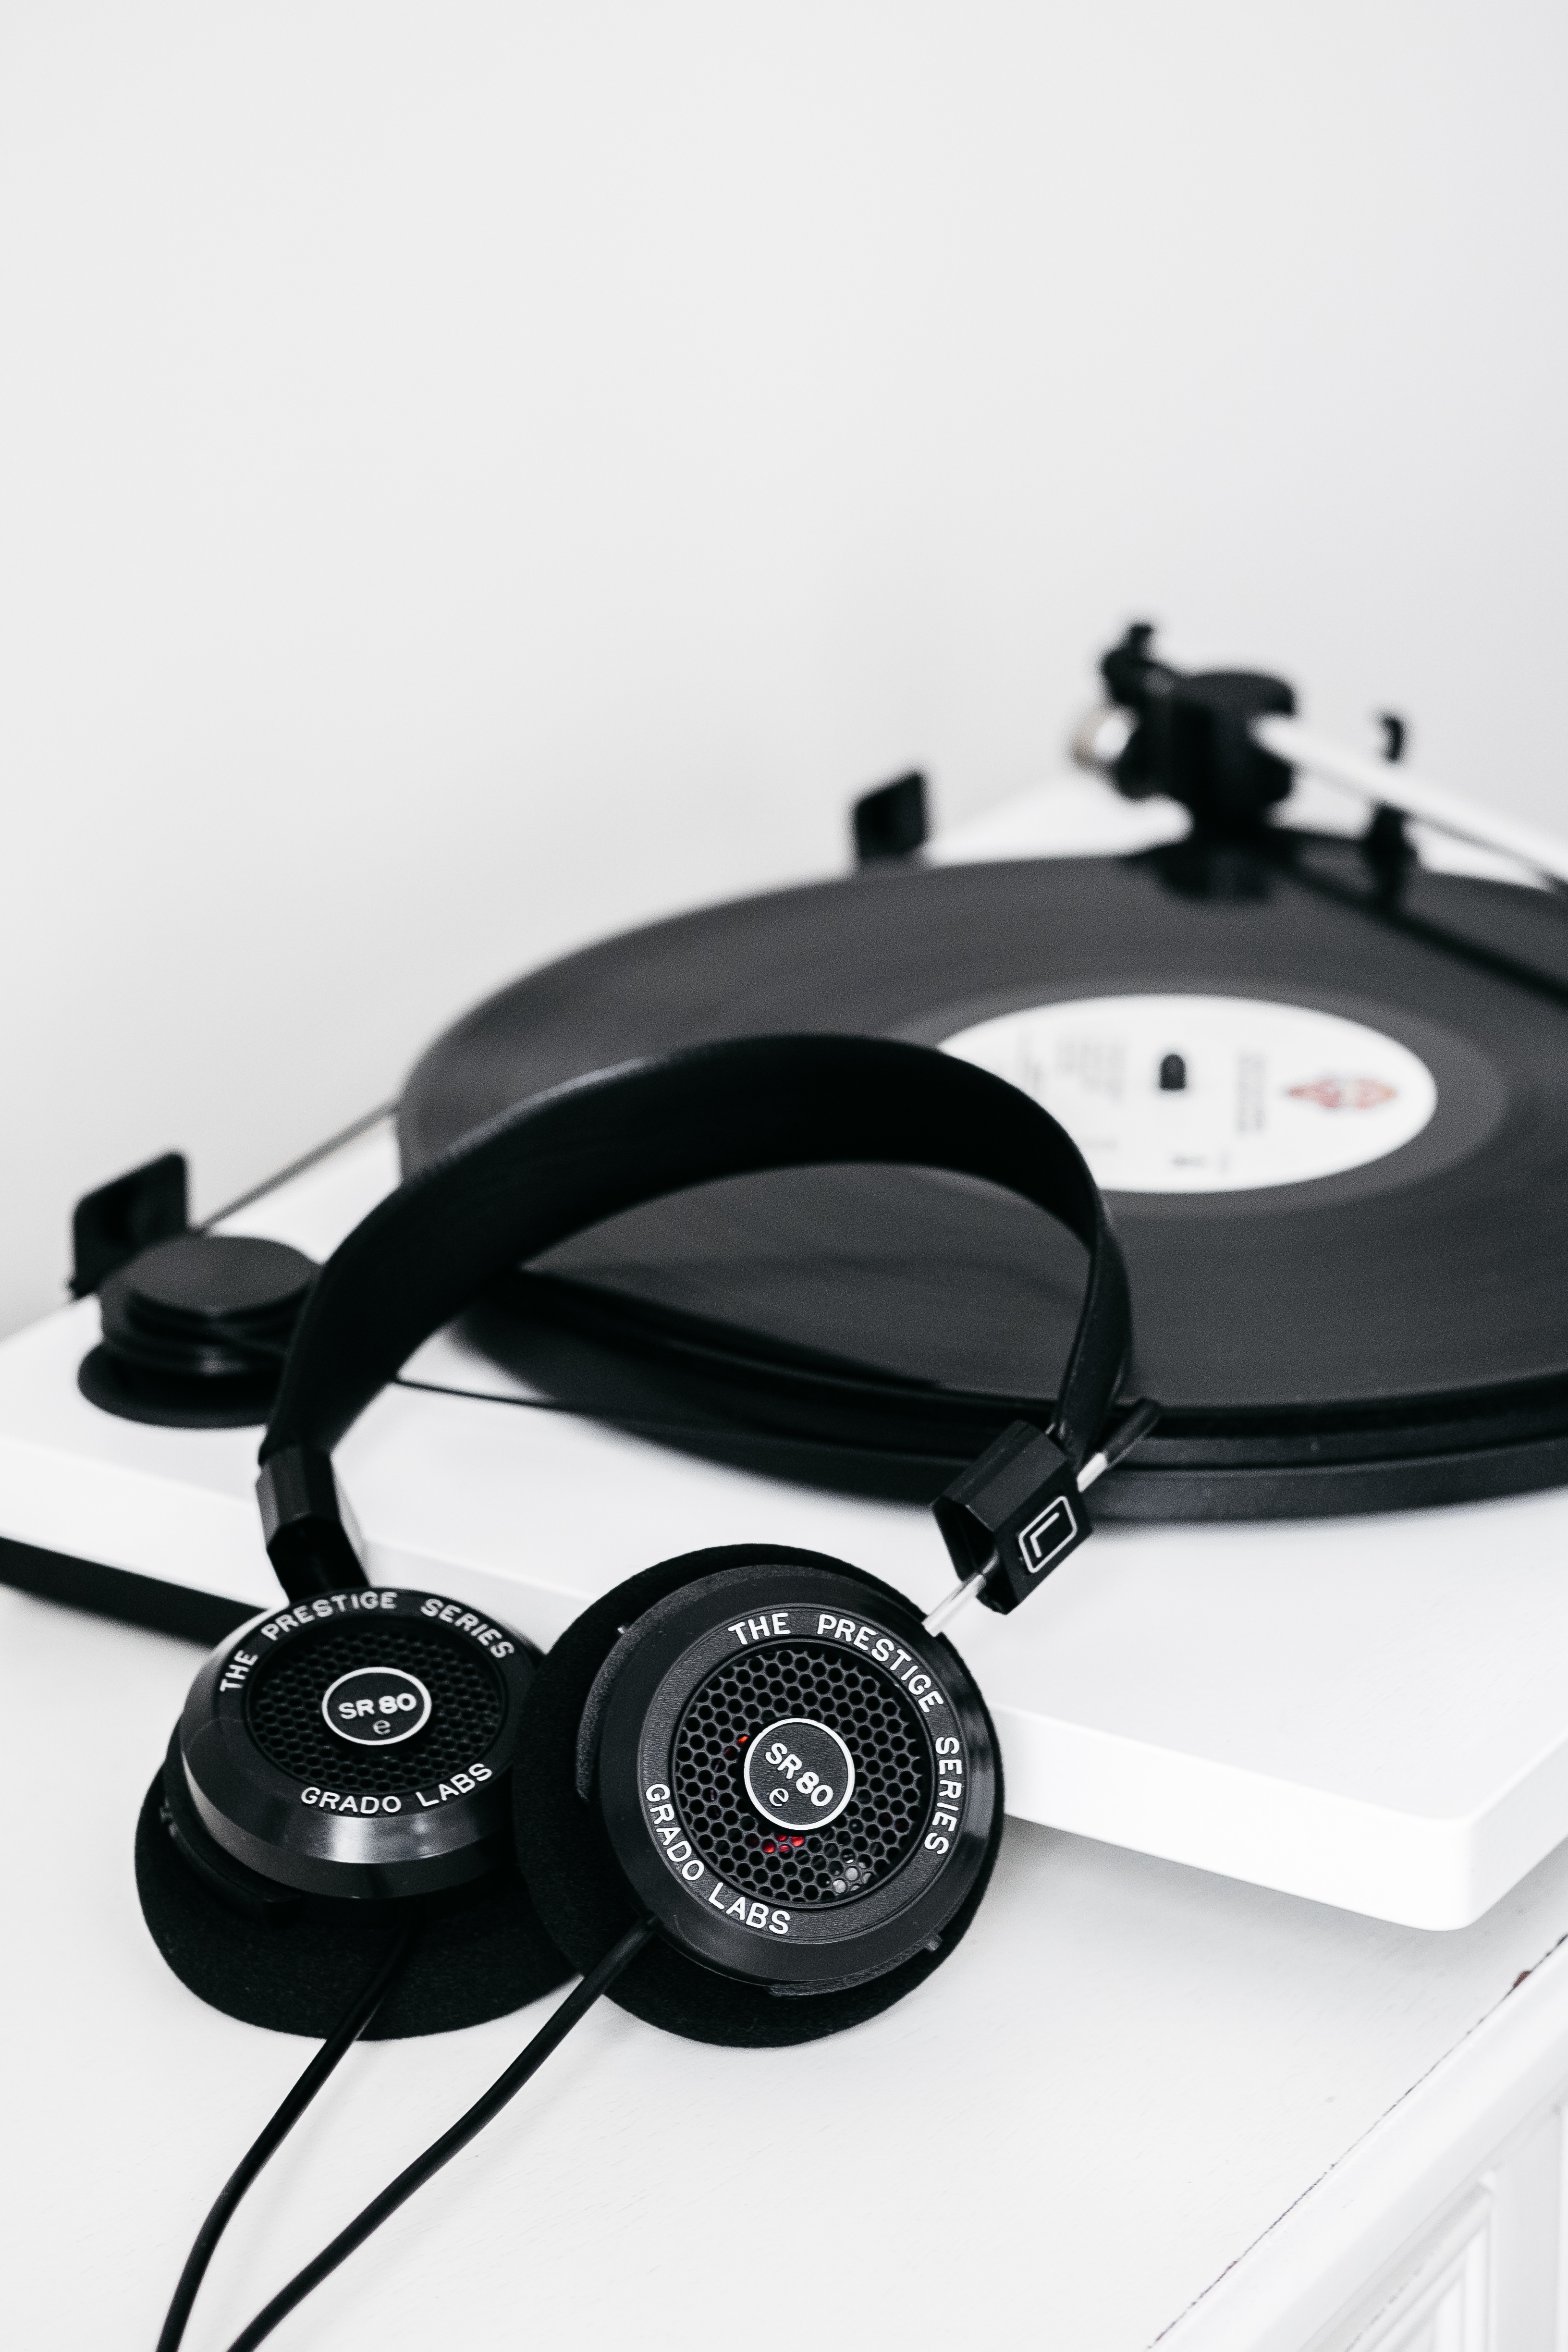 record player, vinyl, headphones, black, music, plate, turntable